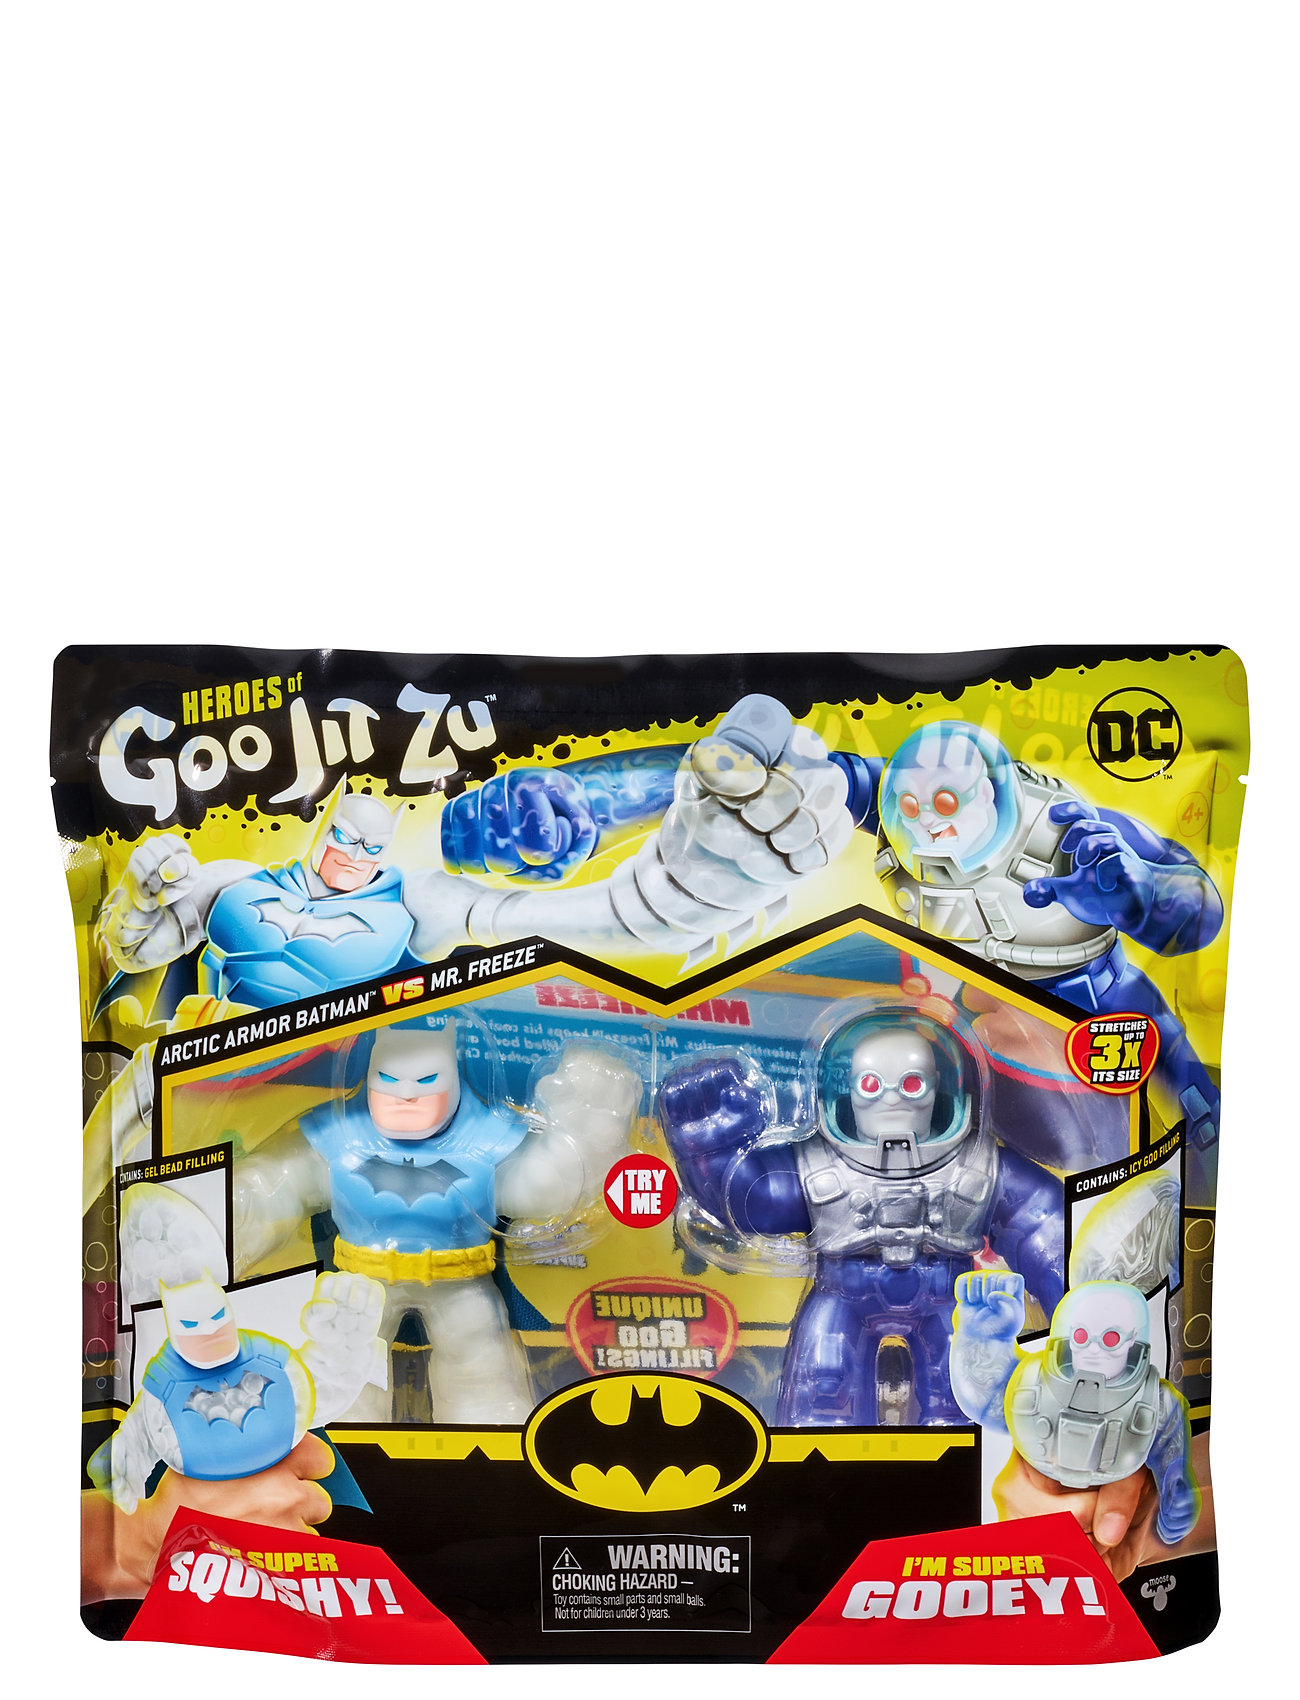 Goo Jit Zu Dc S4 Batman Vs Mr Freeze Toys Playsets & Action Figures Action Figures Multi/patterned Goo Jit Zu